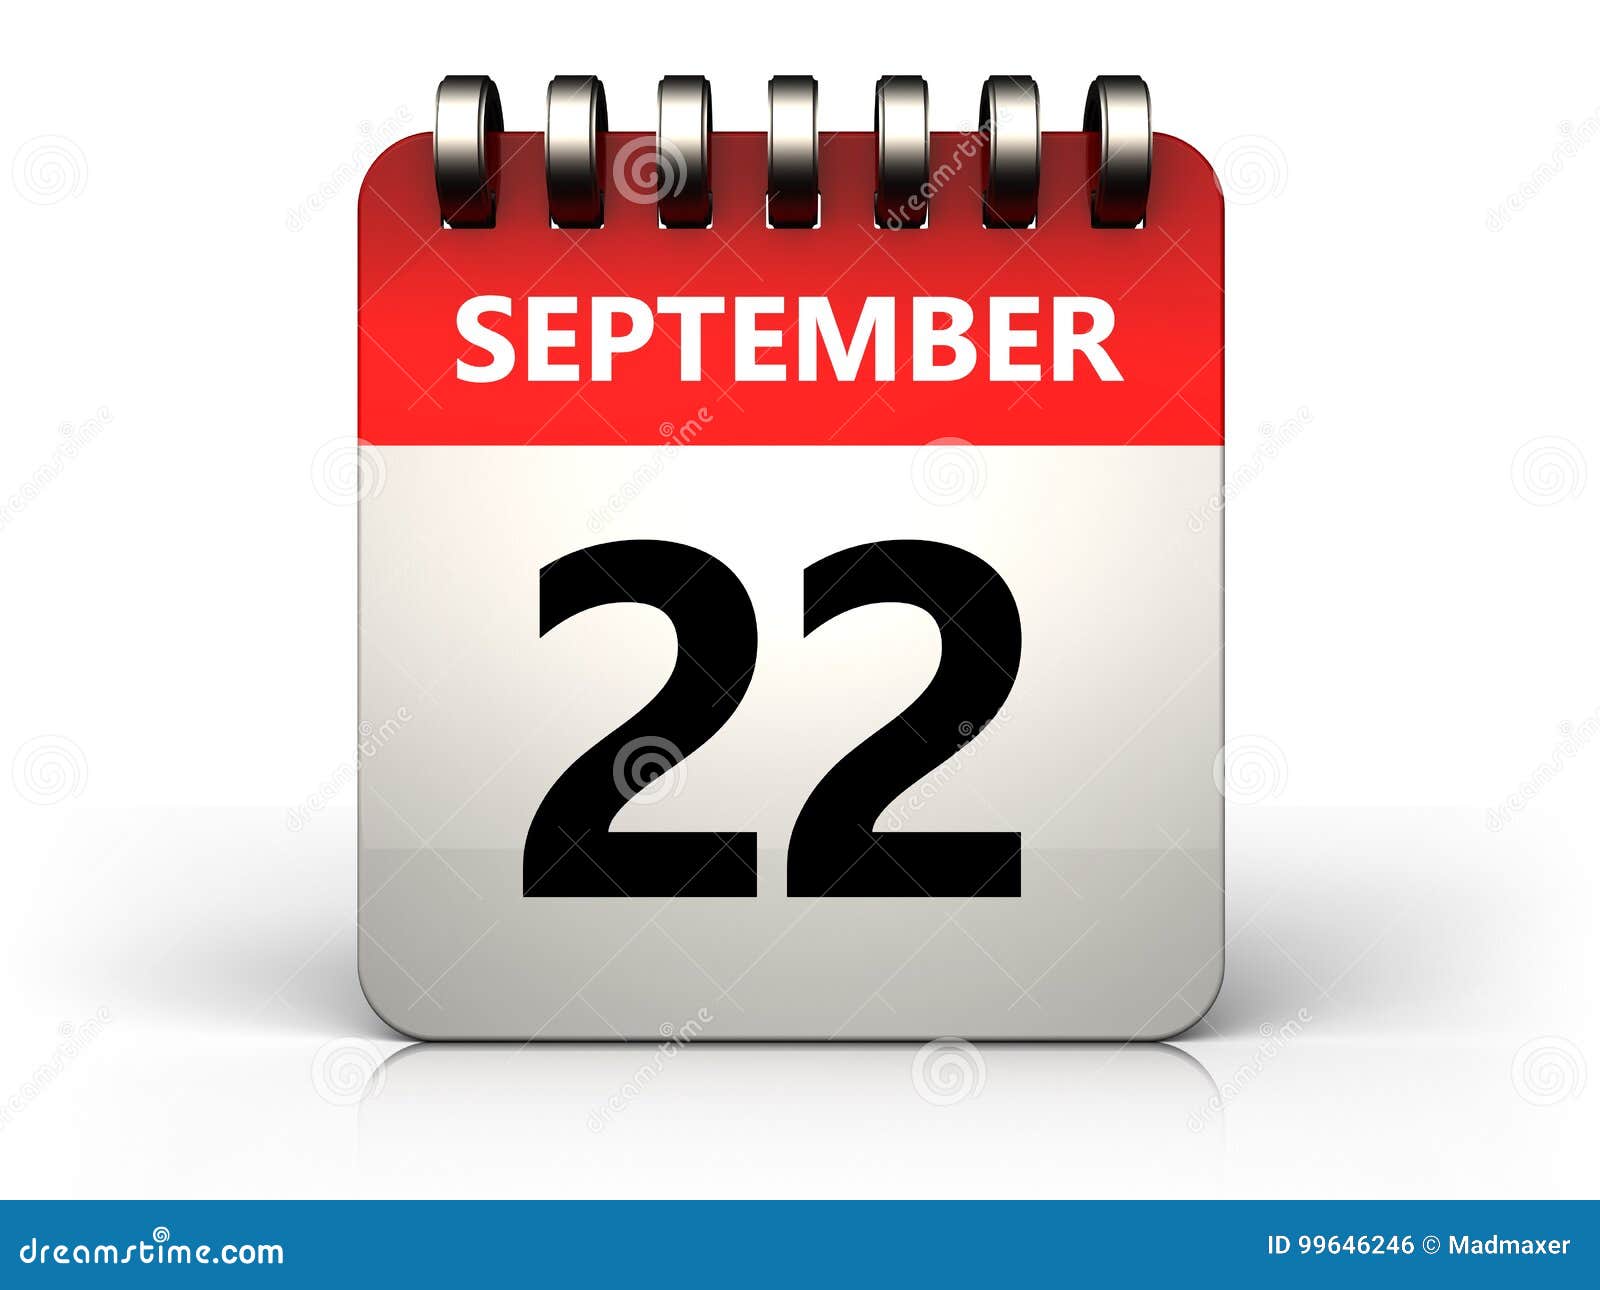 3d 22 september calendar stock illustration. Illustration of month